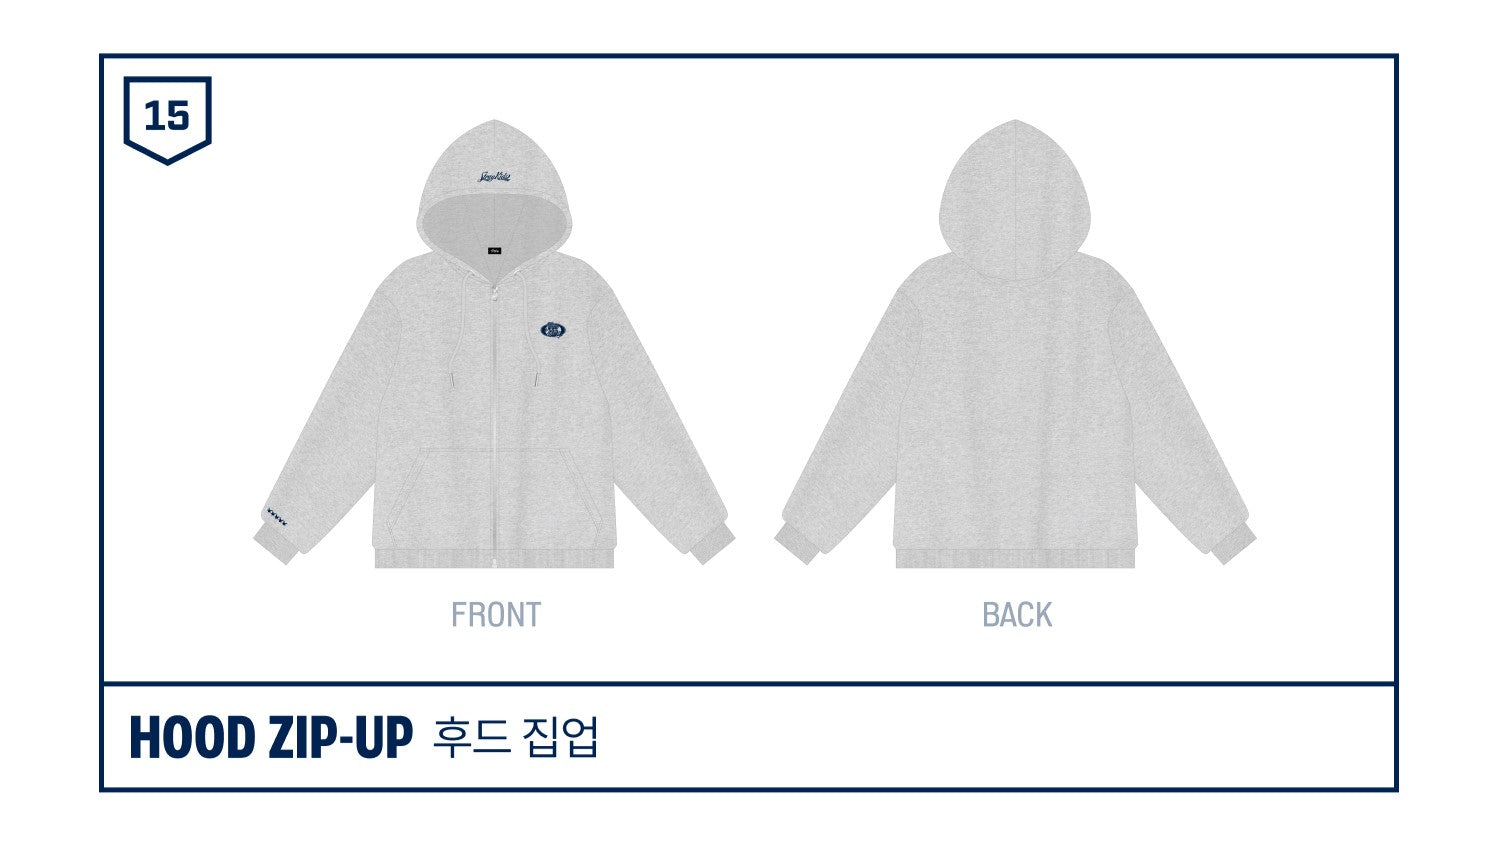    jstore_online_stray_kids_5_star_seoul_special_merch_zip_up_hoodie